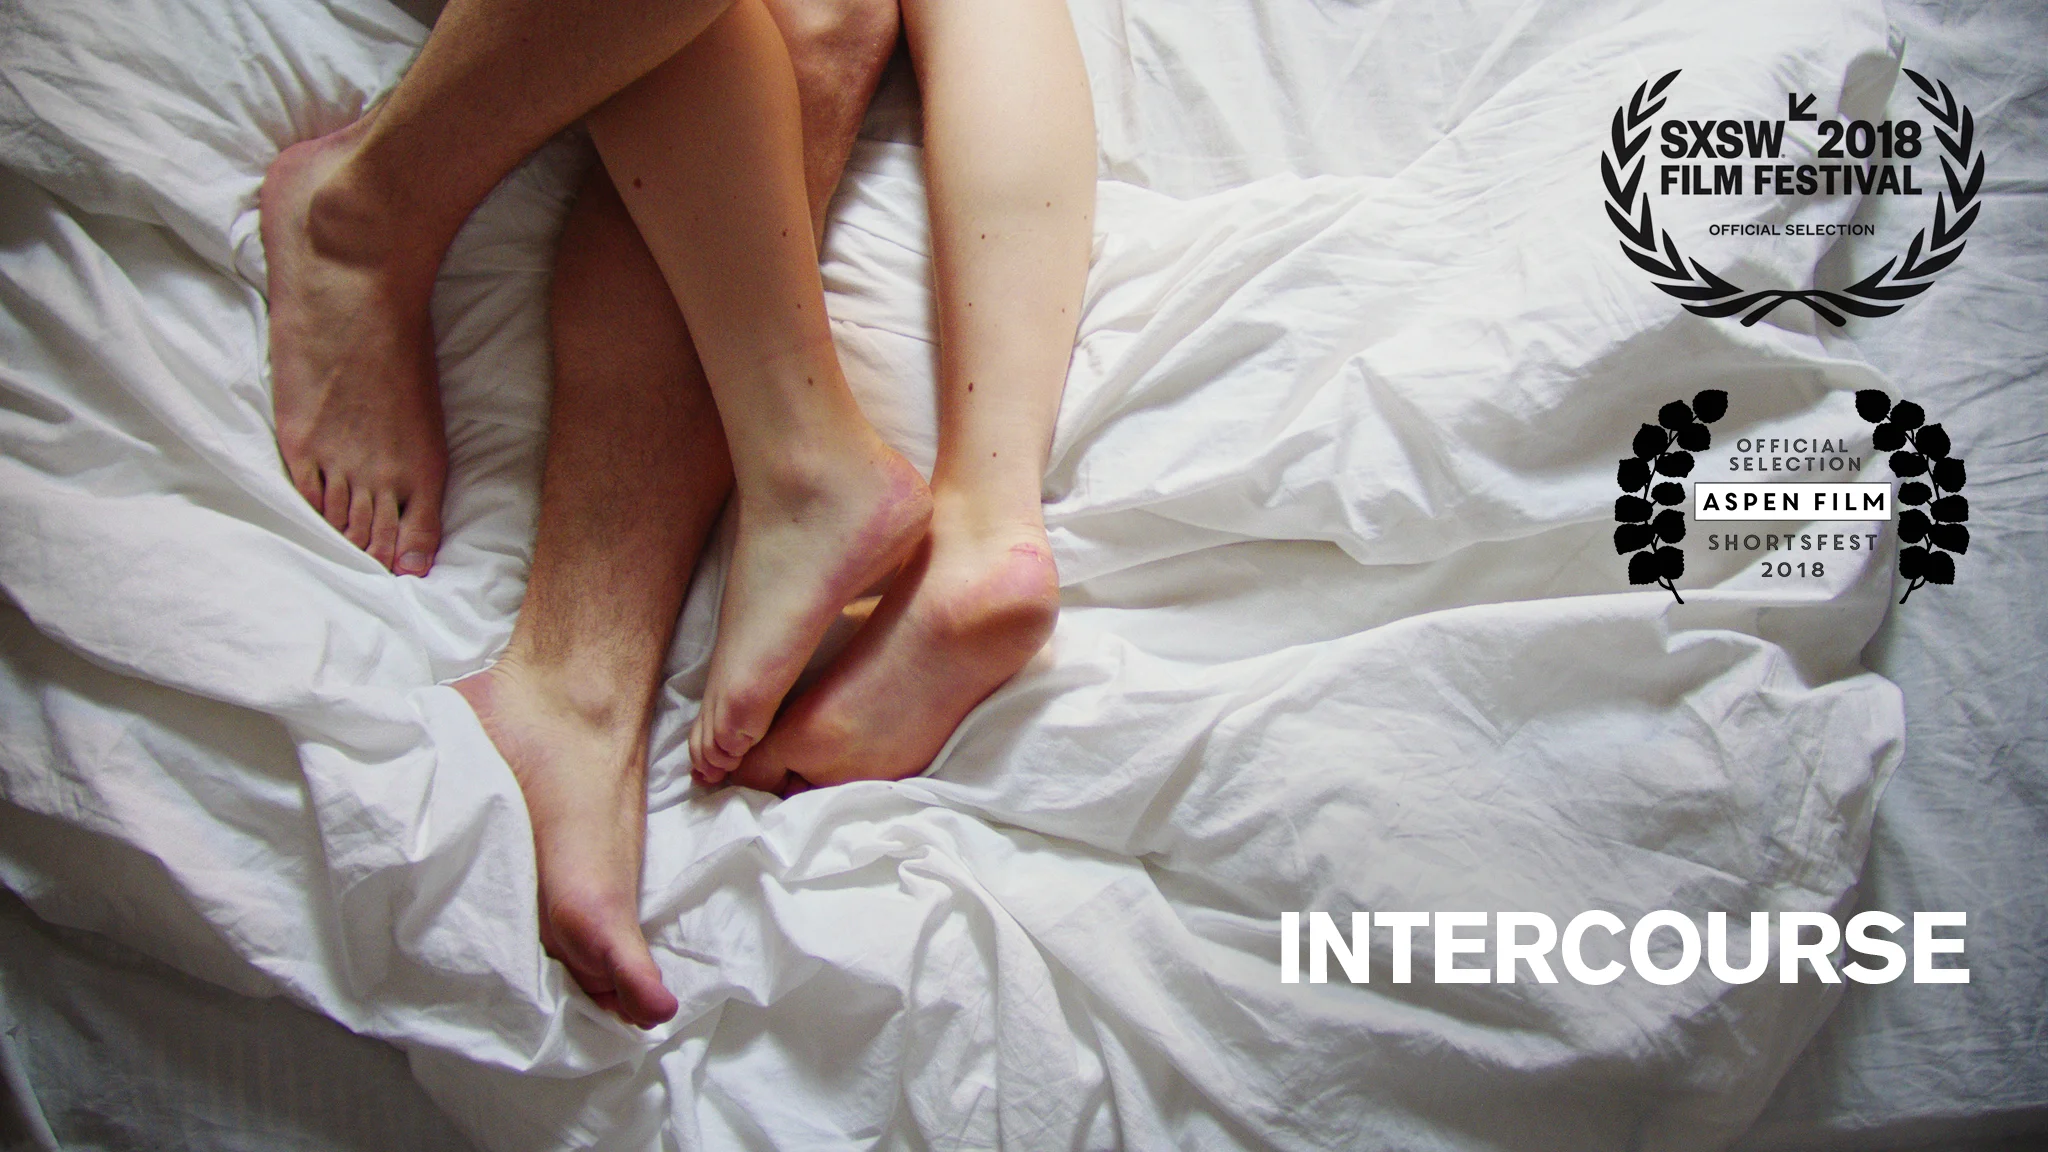 Intercourcesex - INTERCOURSE on Vimeo